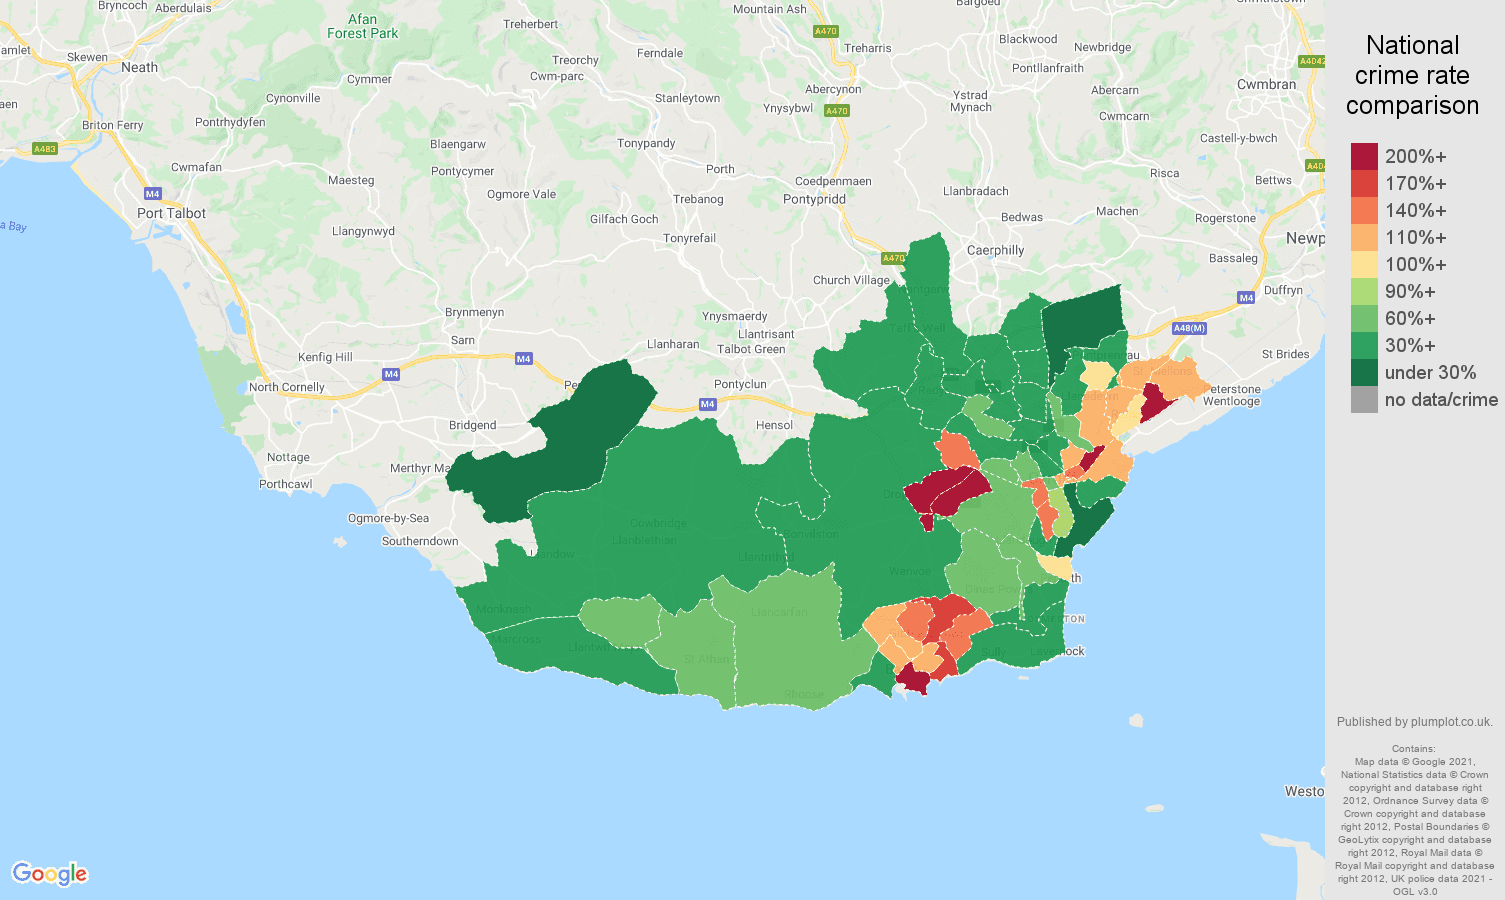 South Glamorgan violent crime rate comparison map